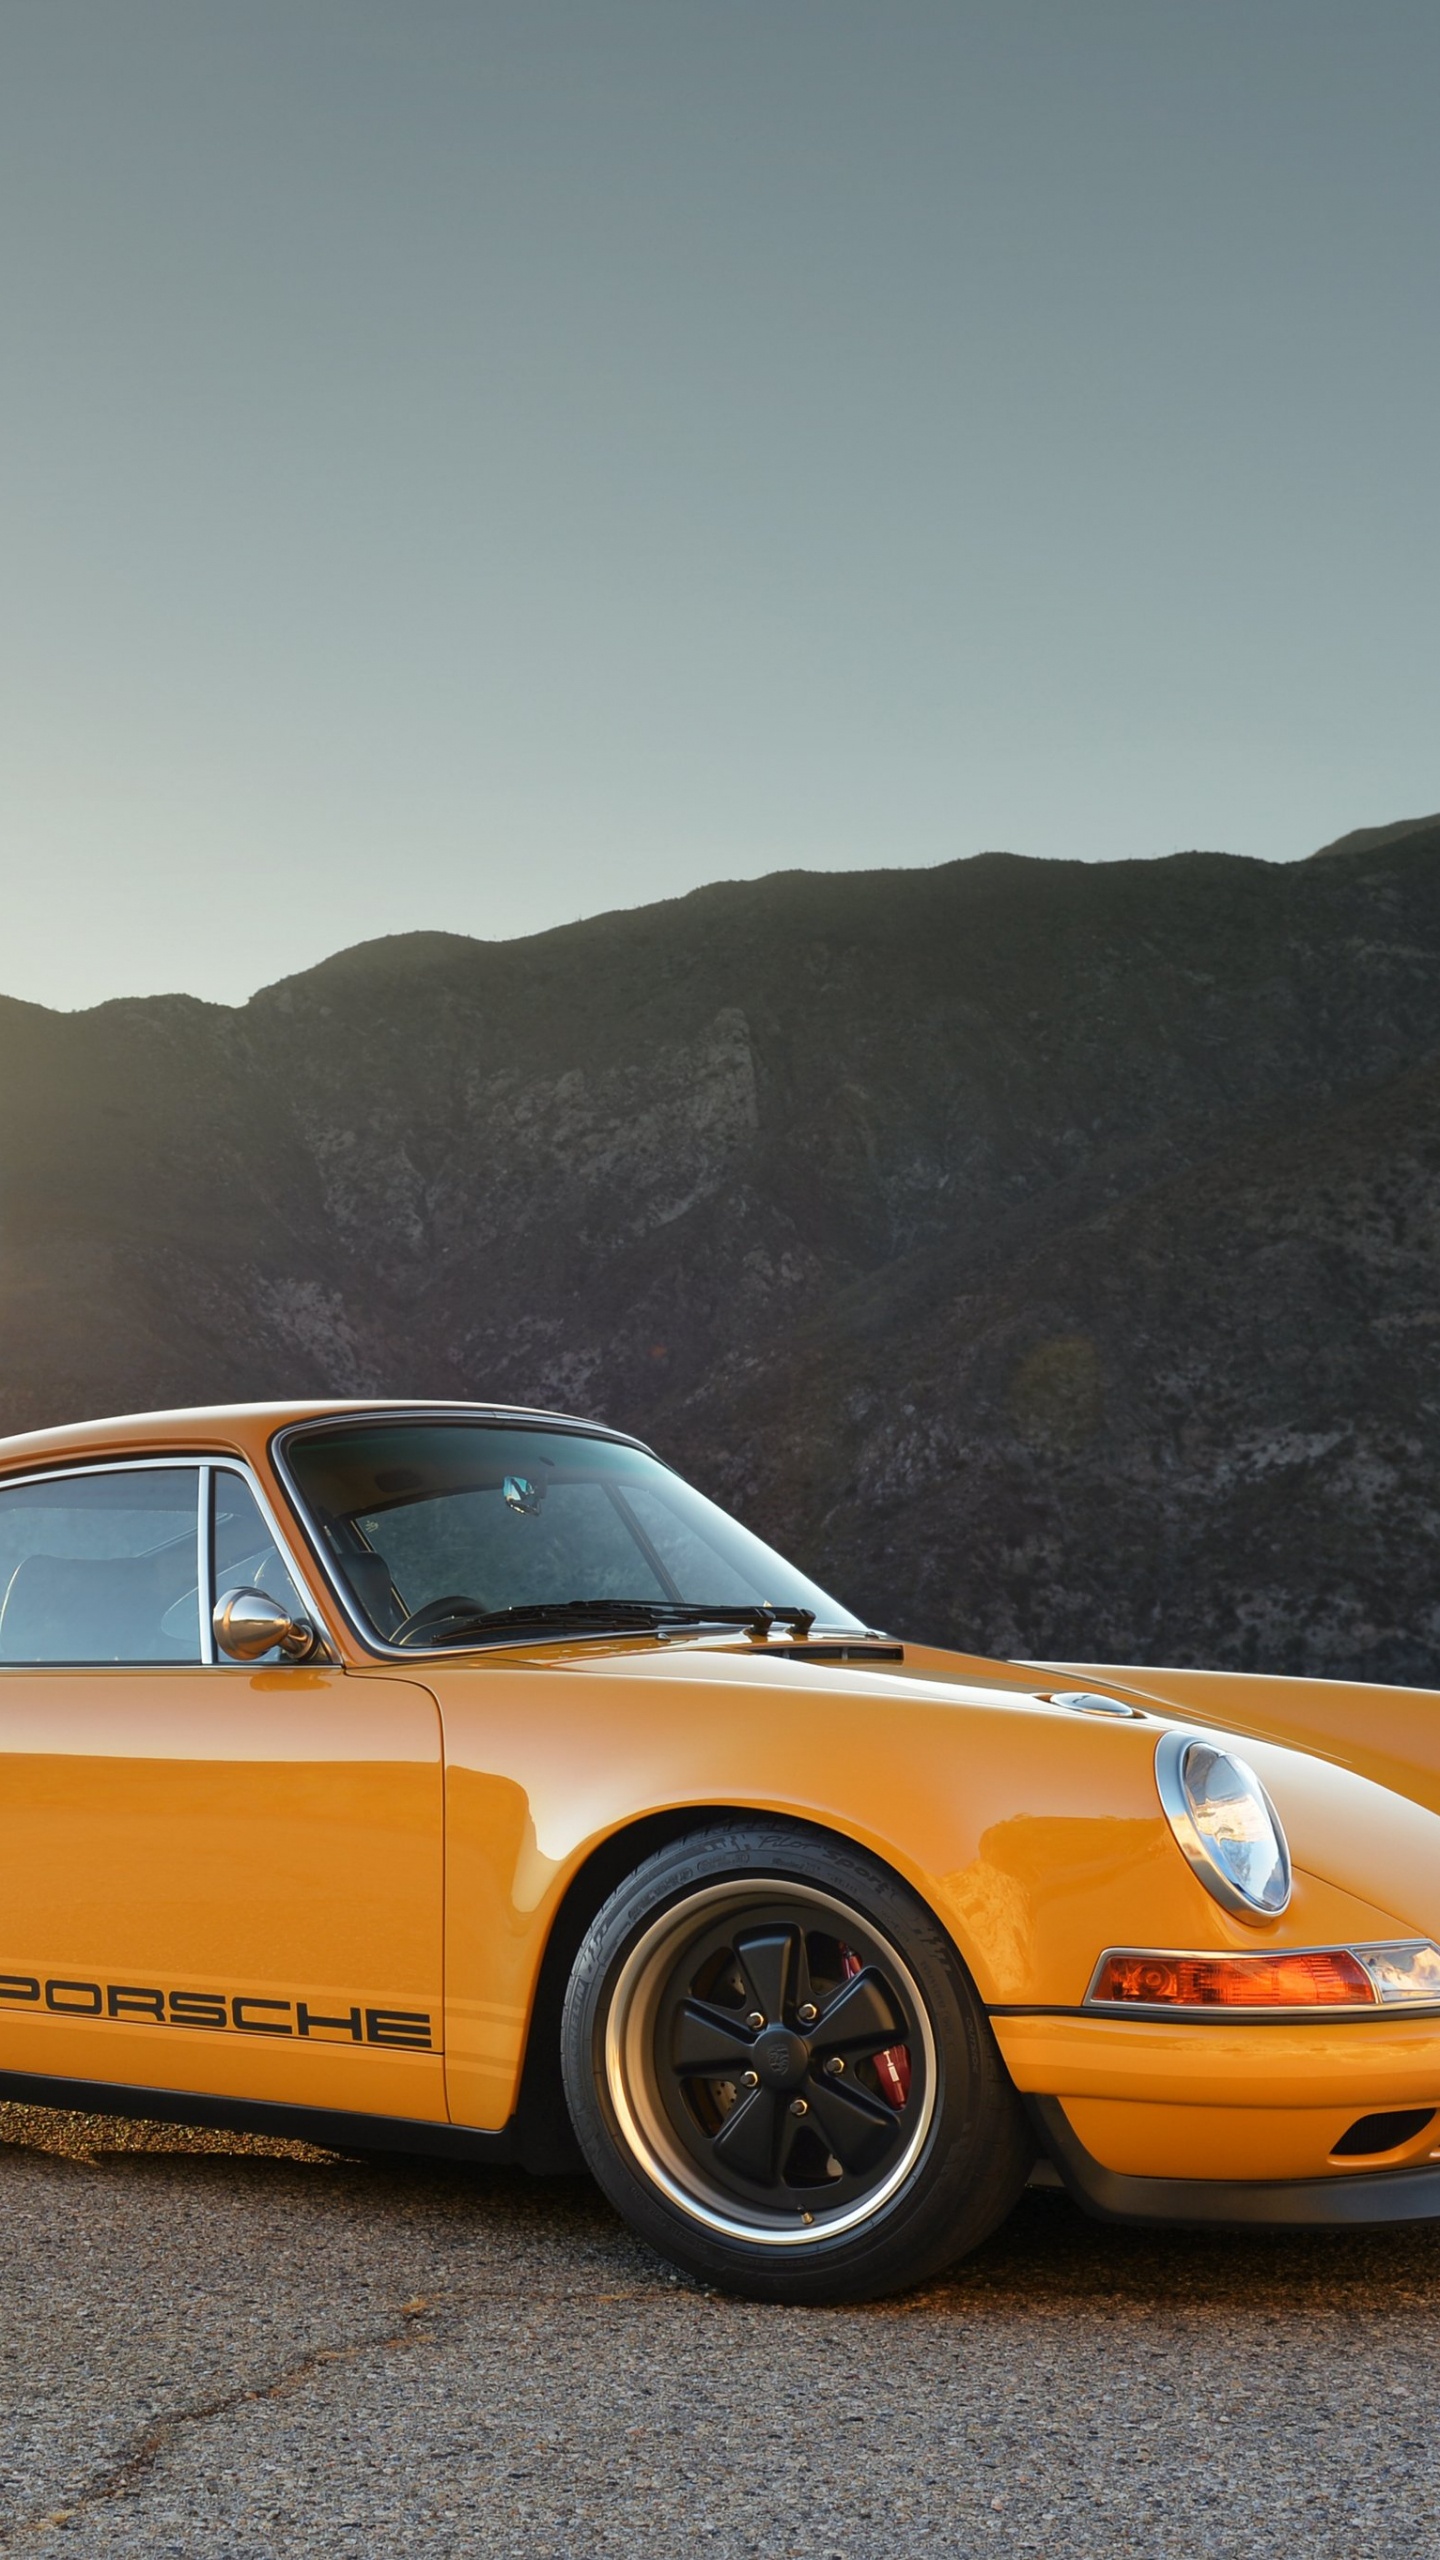 Yellow Porsche 911 on Brown Dirt Road During Daytime. Wallpaper in 1440x2560 Resolution